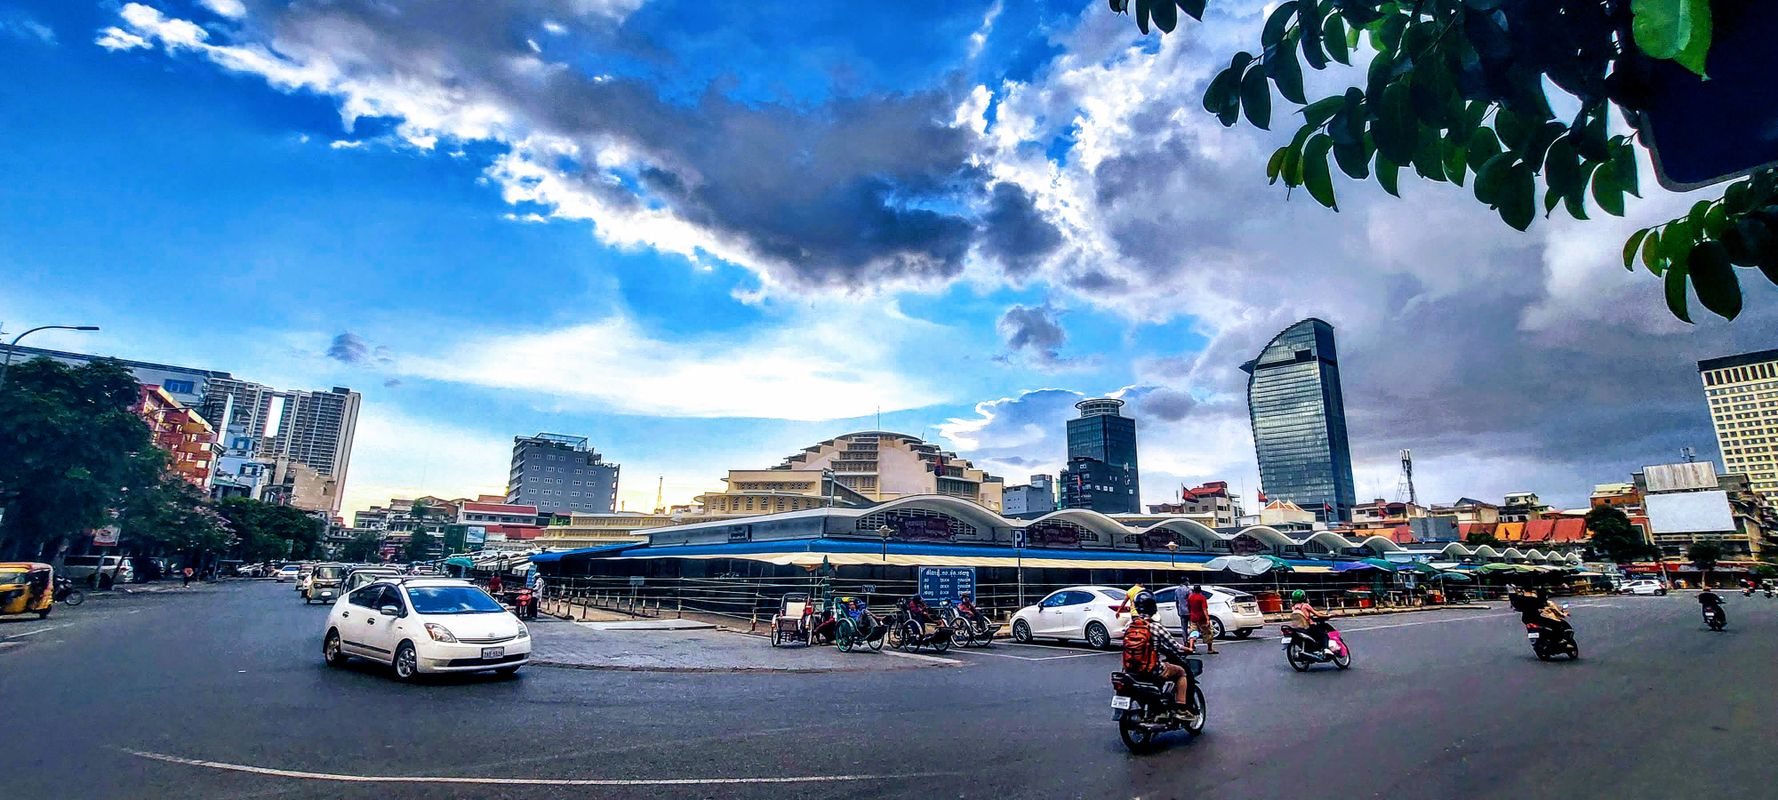 The Central market in Phnom Penh